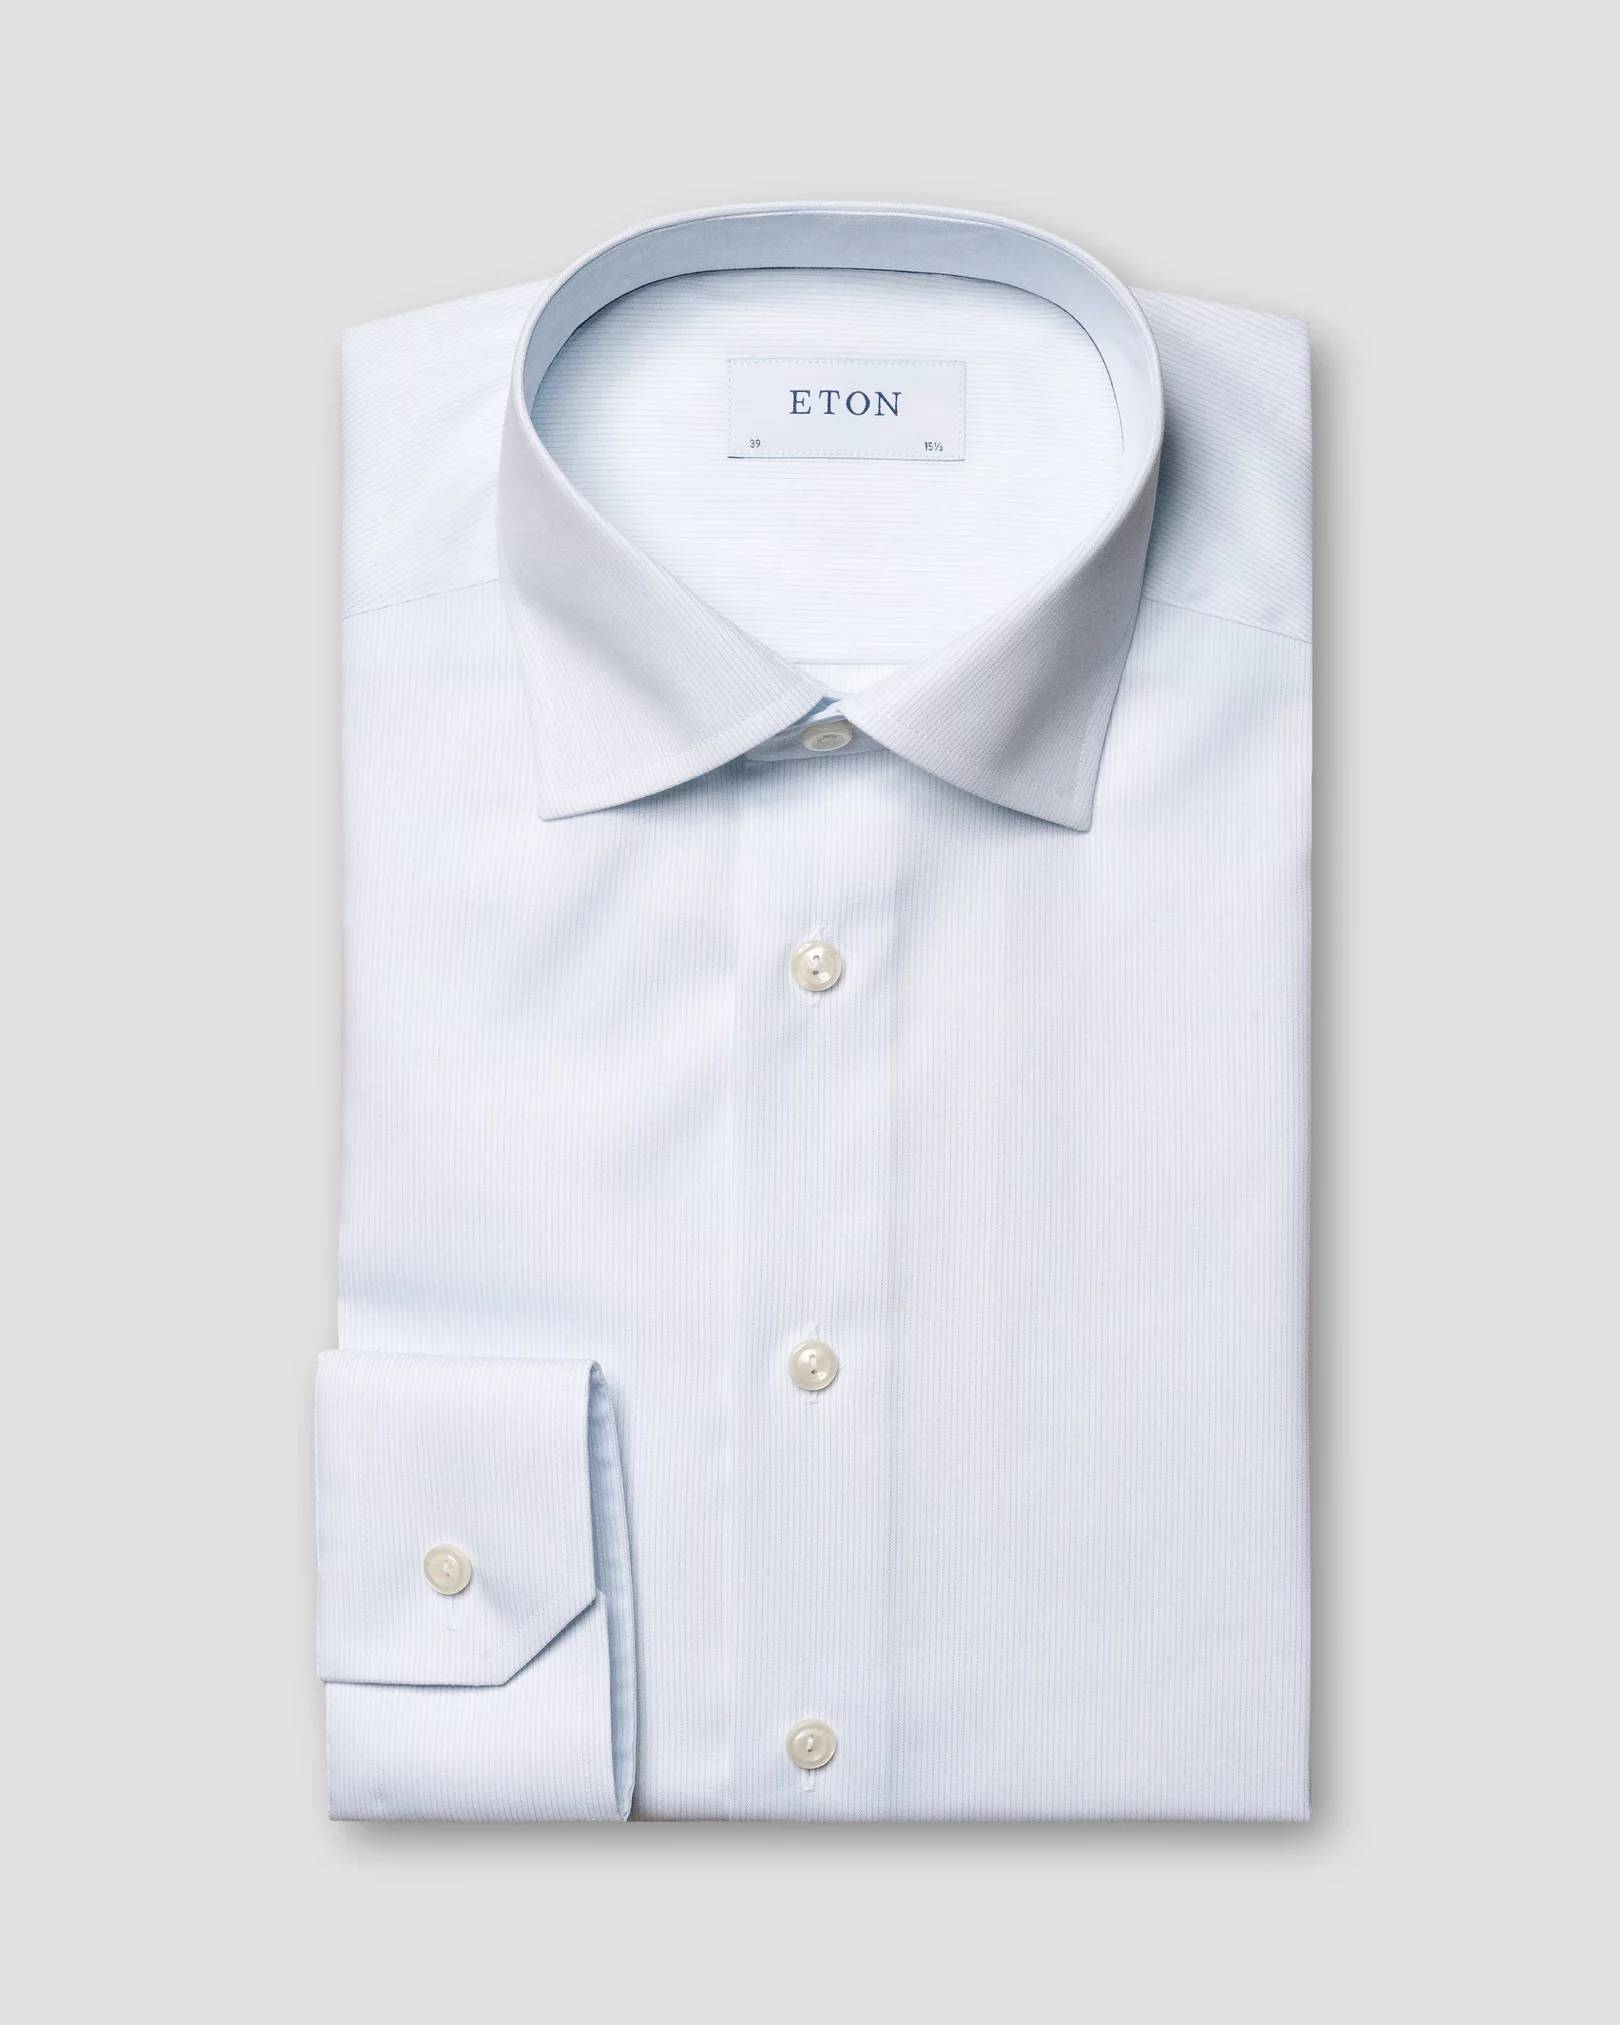 Eton - light blue twill solid shirt